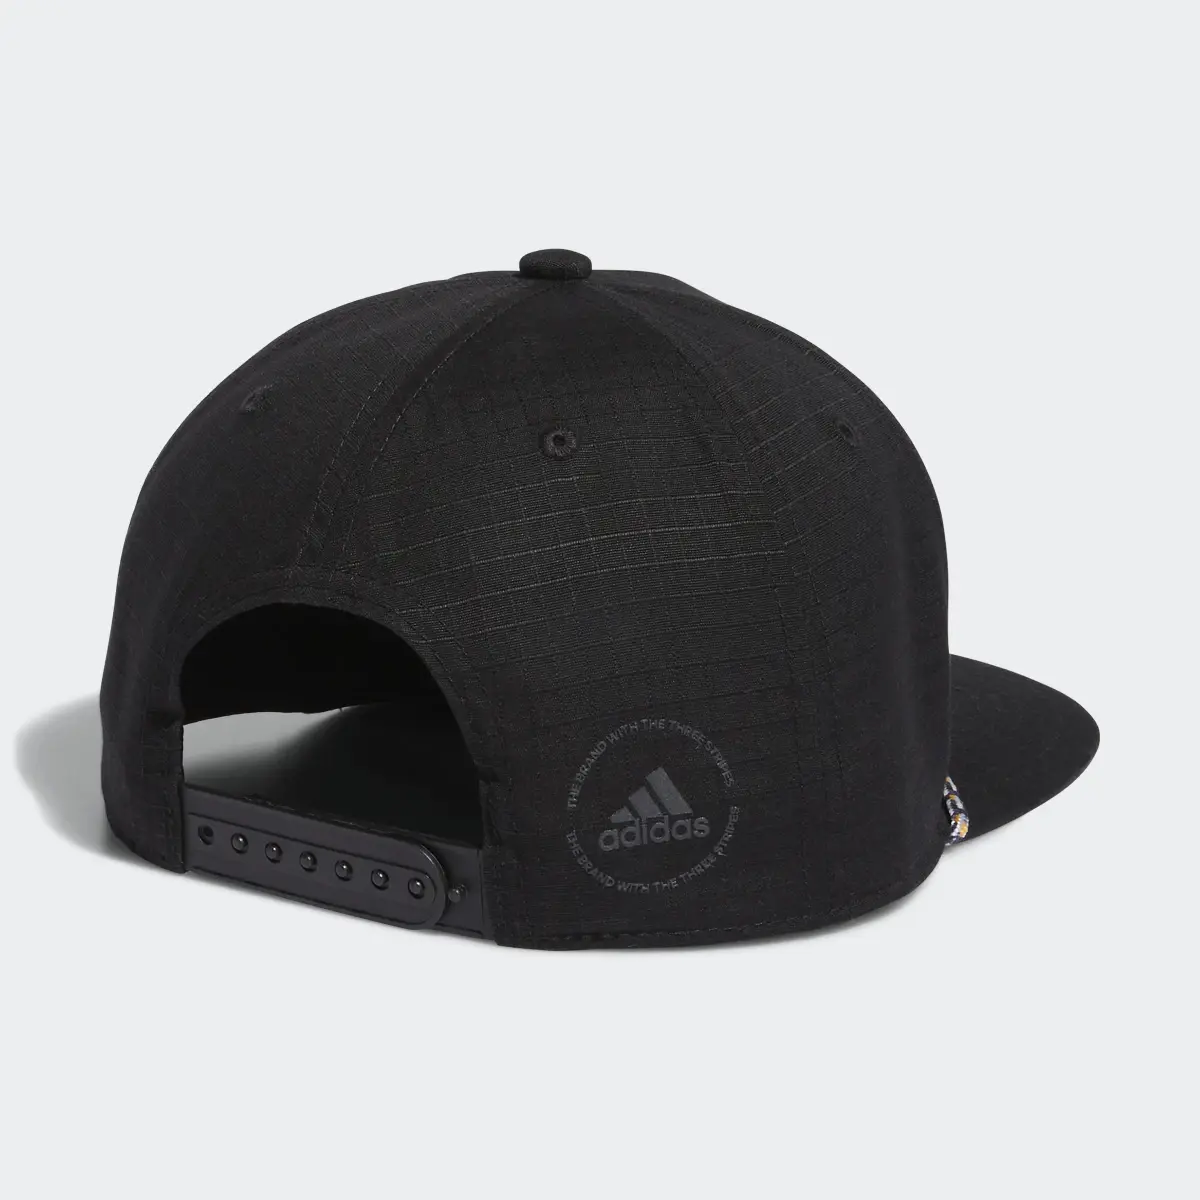 Adidas Affiliate Snapback Hat. 3